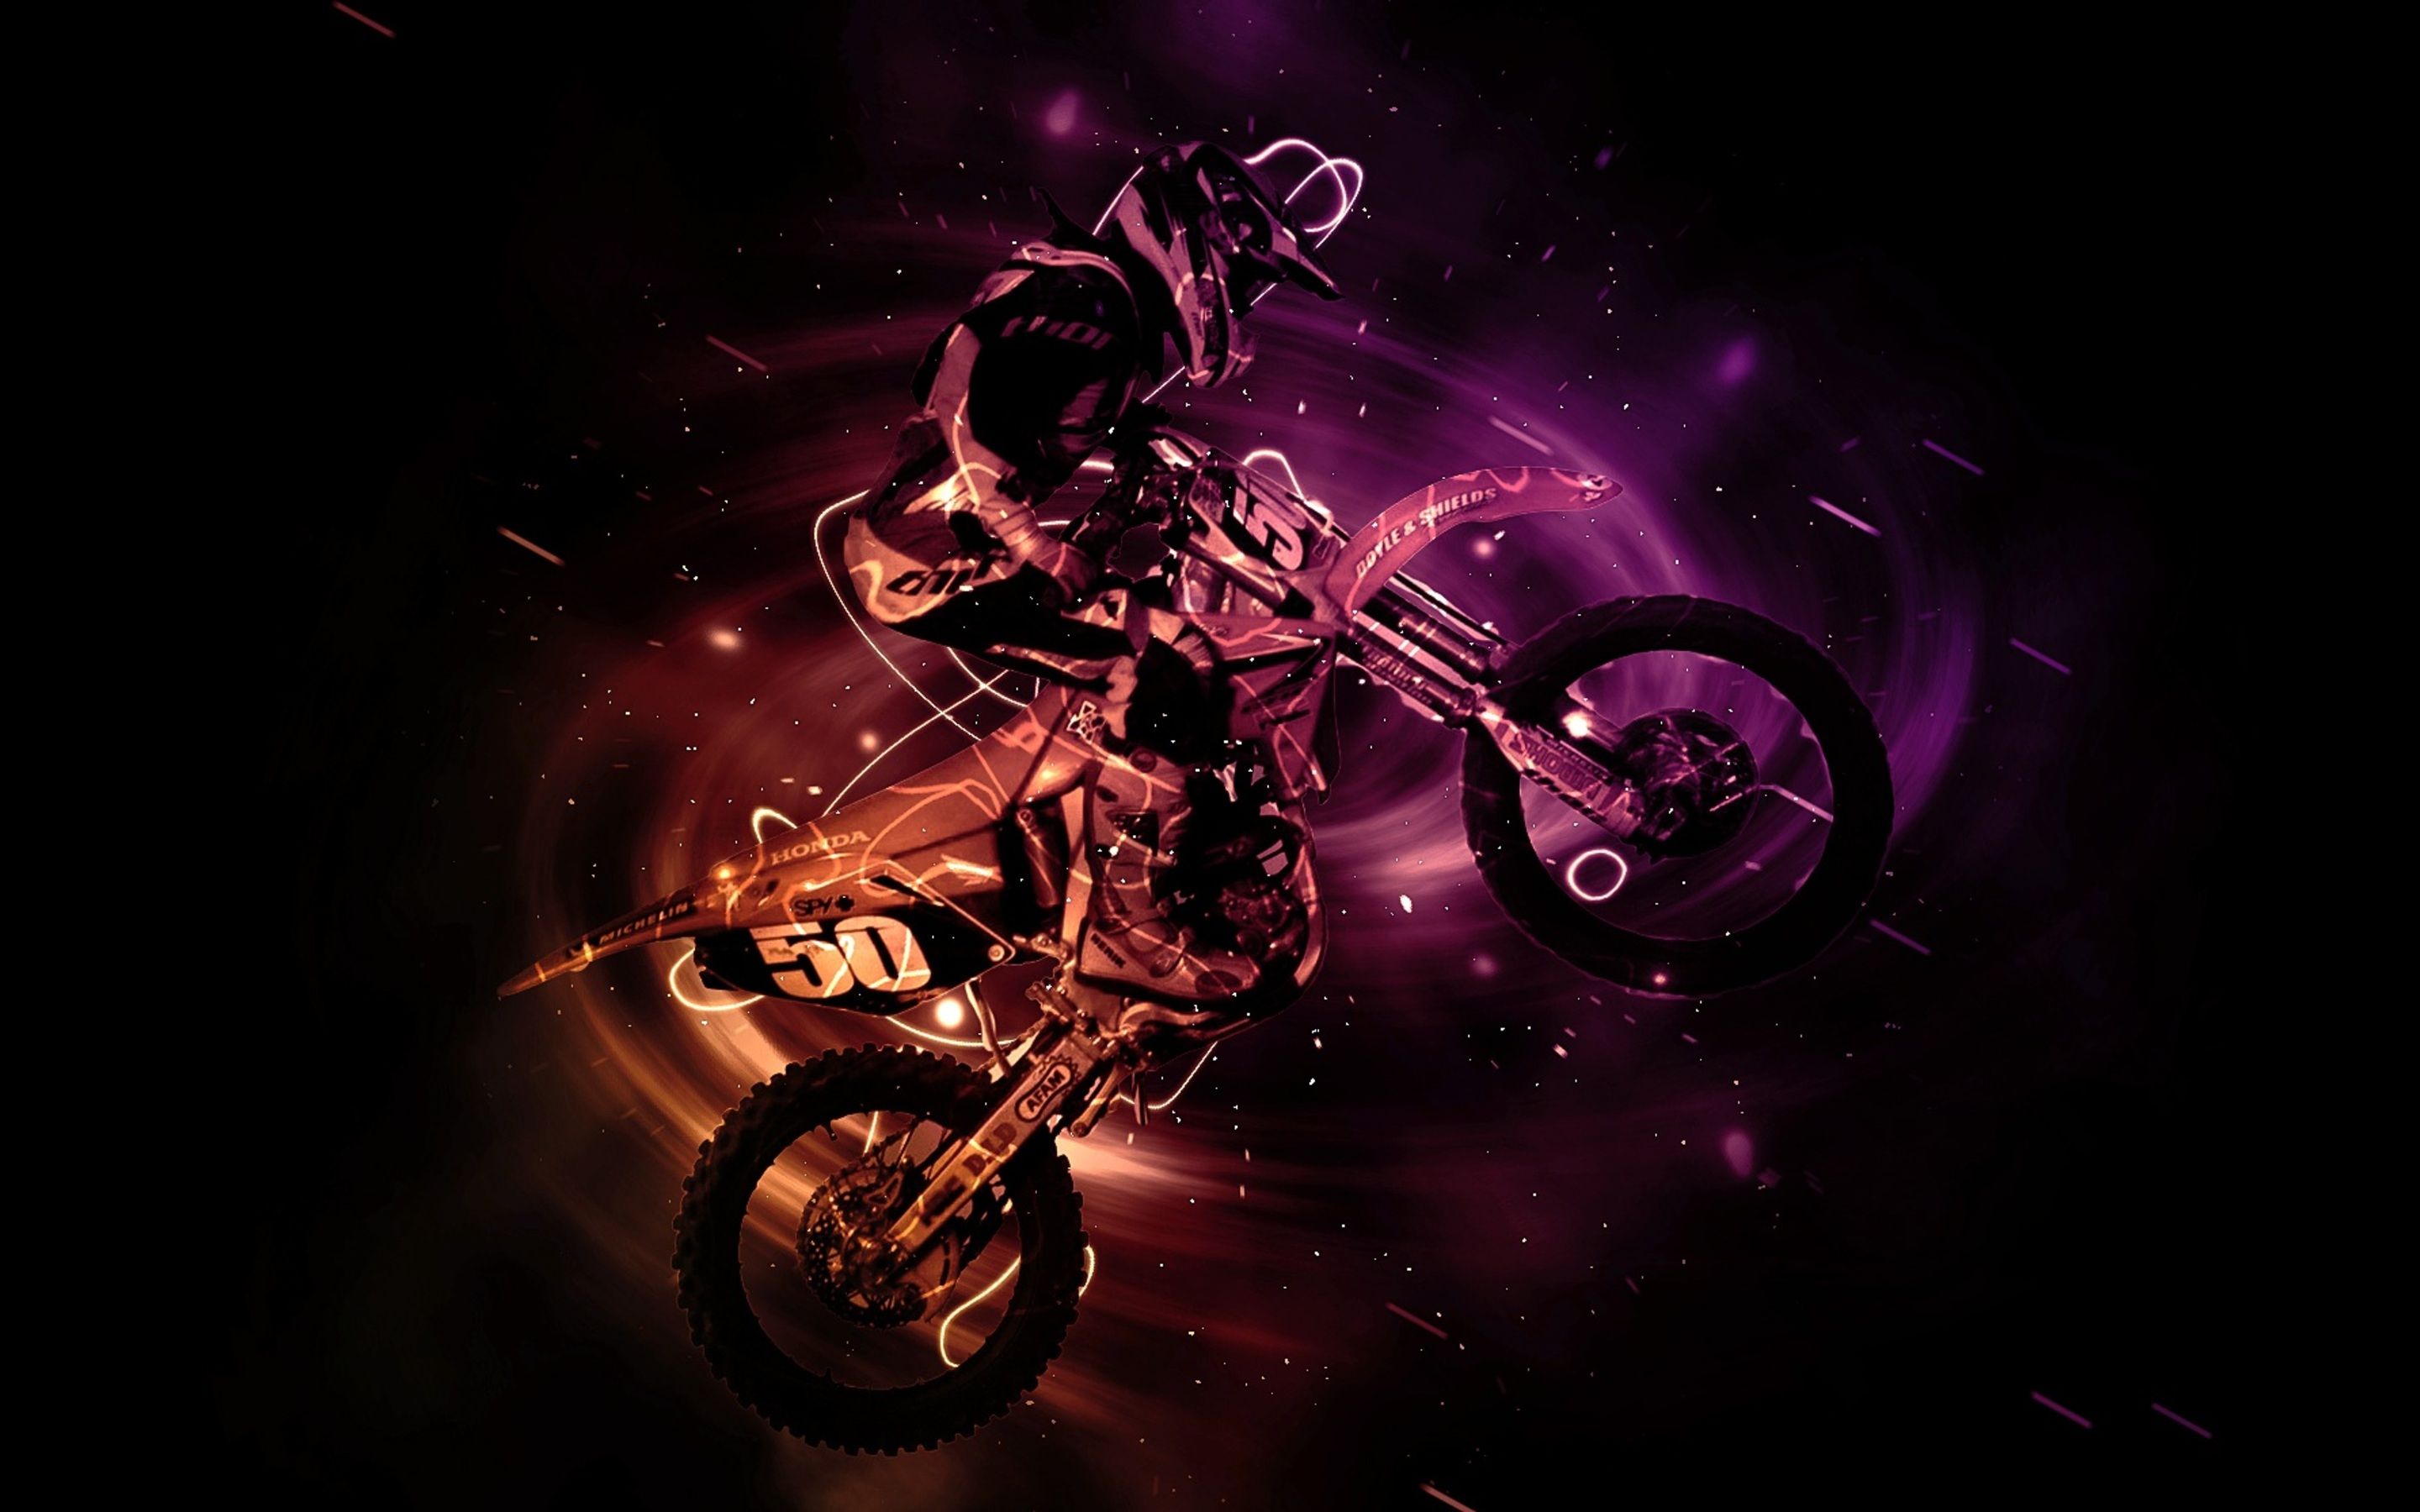 for apple download Sunset Bike Racing - Motocross